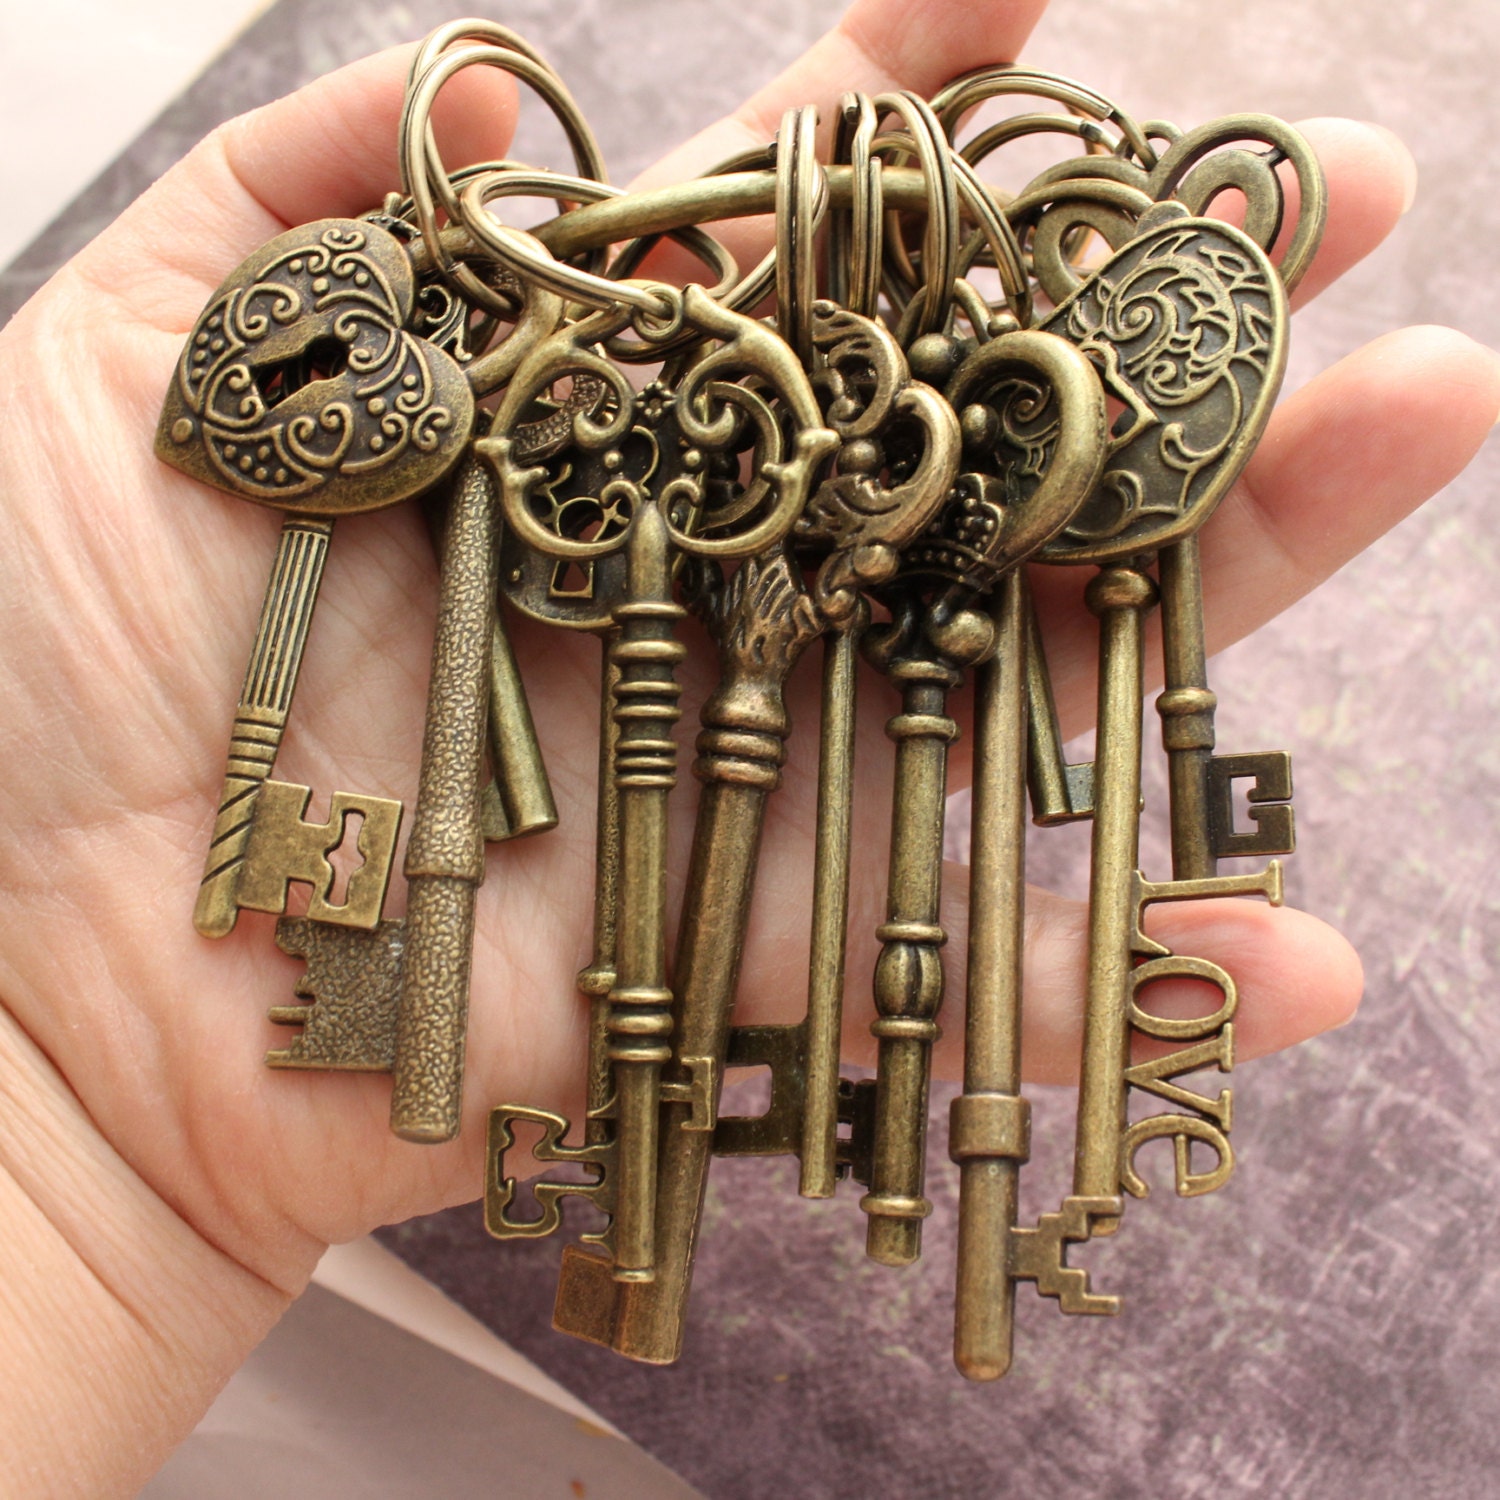 Buy Keys, Lot of 10 Old Keys, Bronze and Brass Color Tone Keys